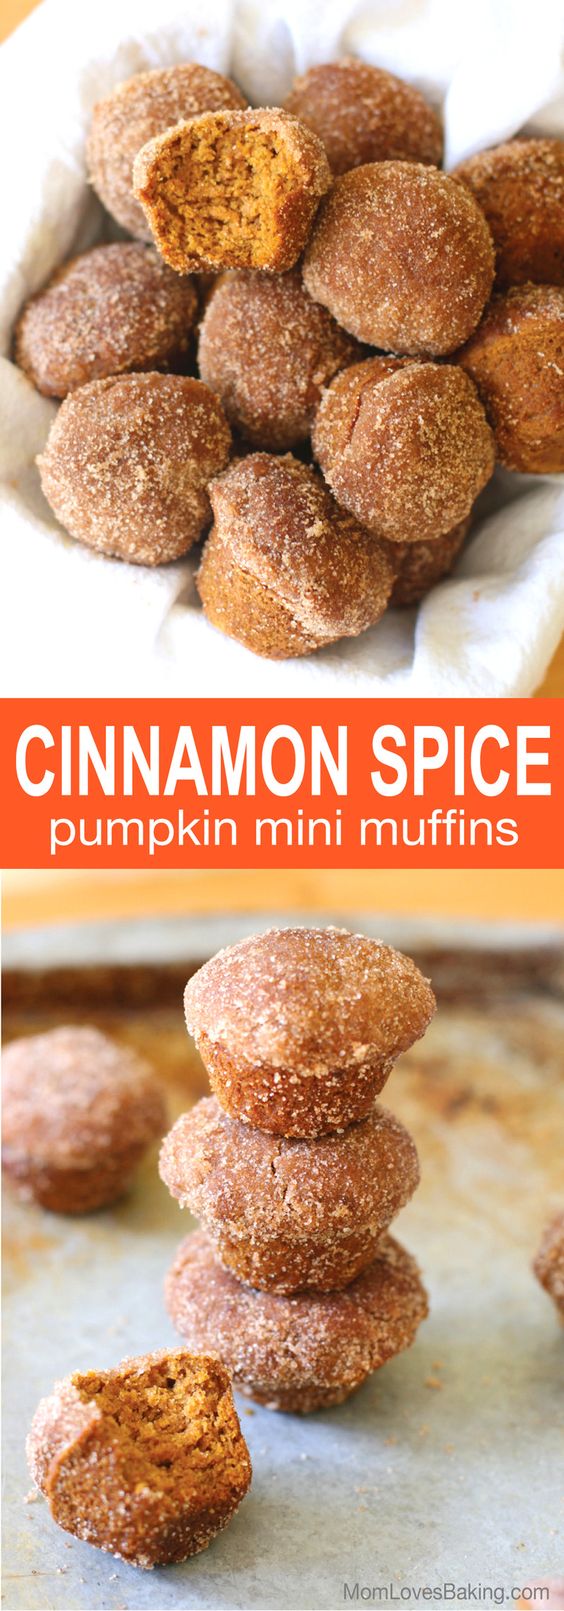 Pumpkin Spice Recipes: Cinnamon Spice Pumpkin Mini Muffins